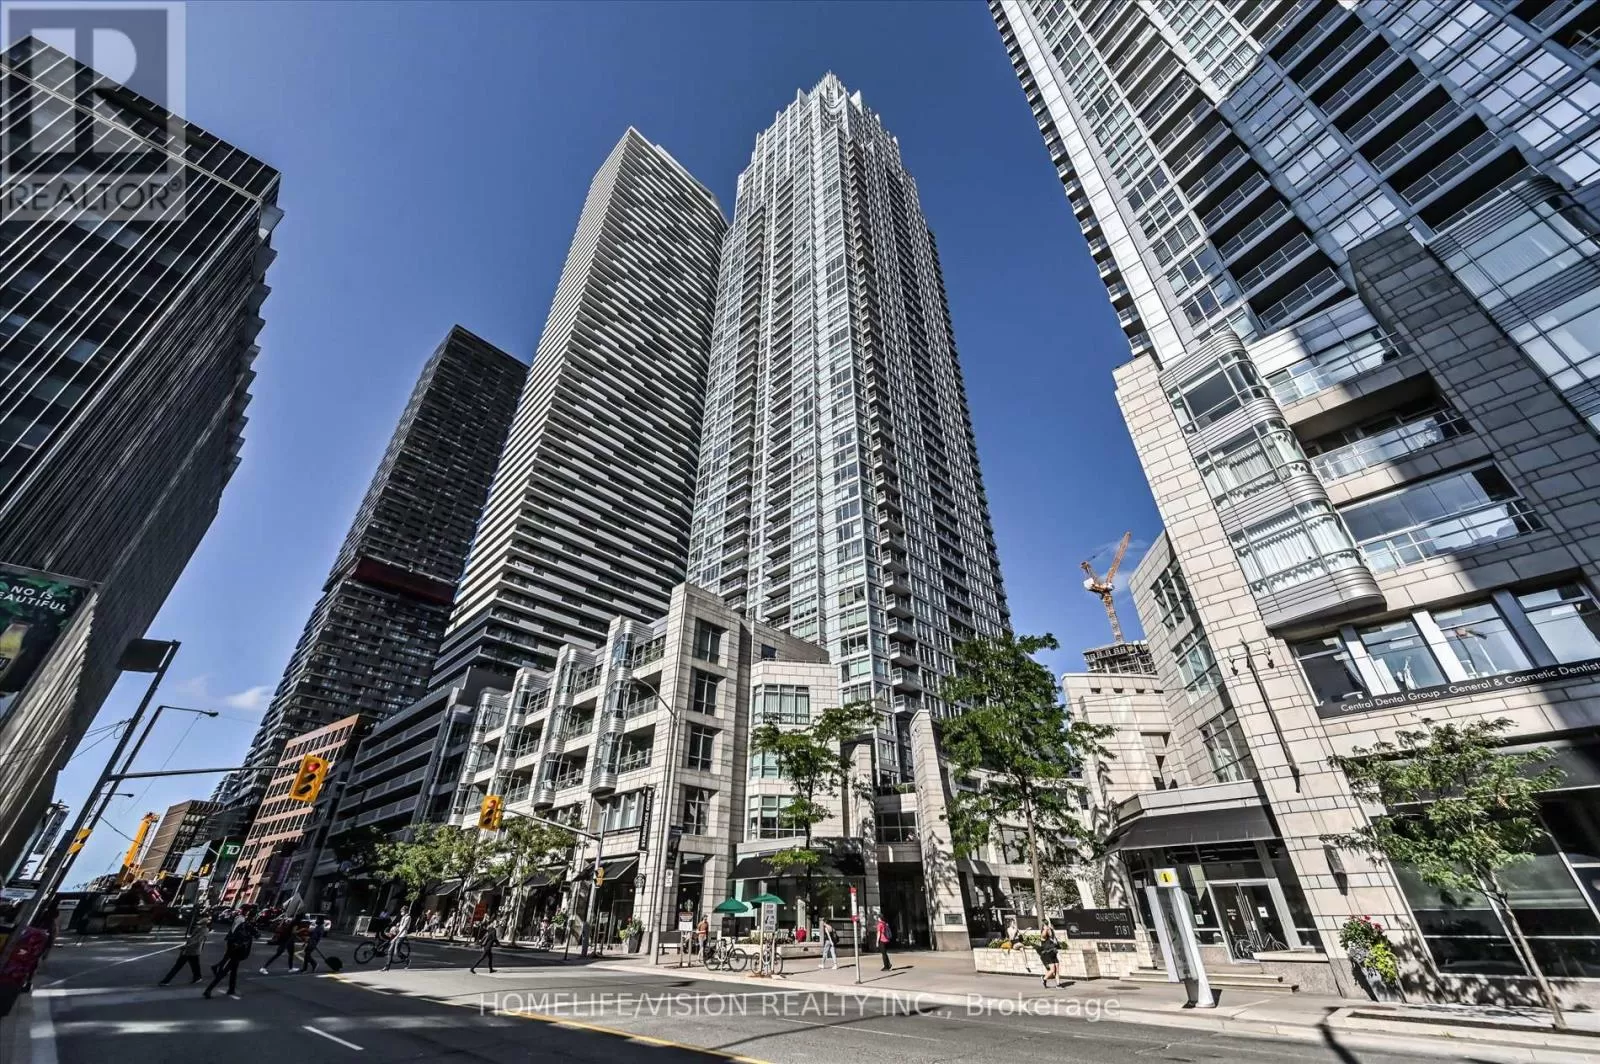 Apartment for rent: 3208 - 2191 Yonge Street, Toronto, Ontario M4S 3H8